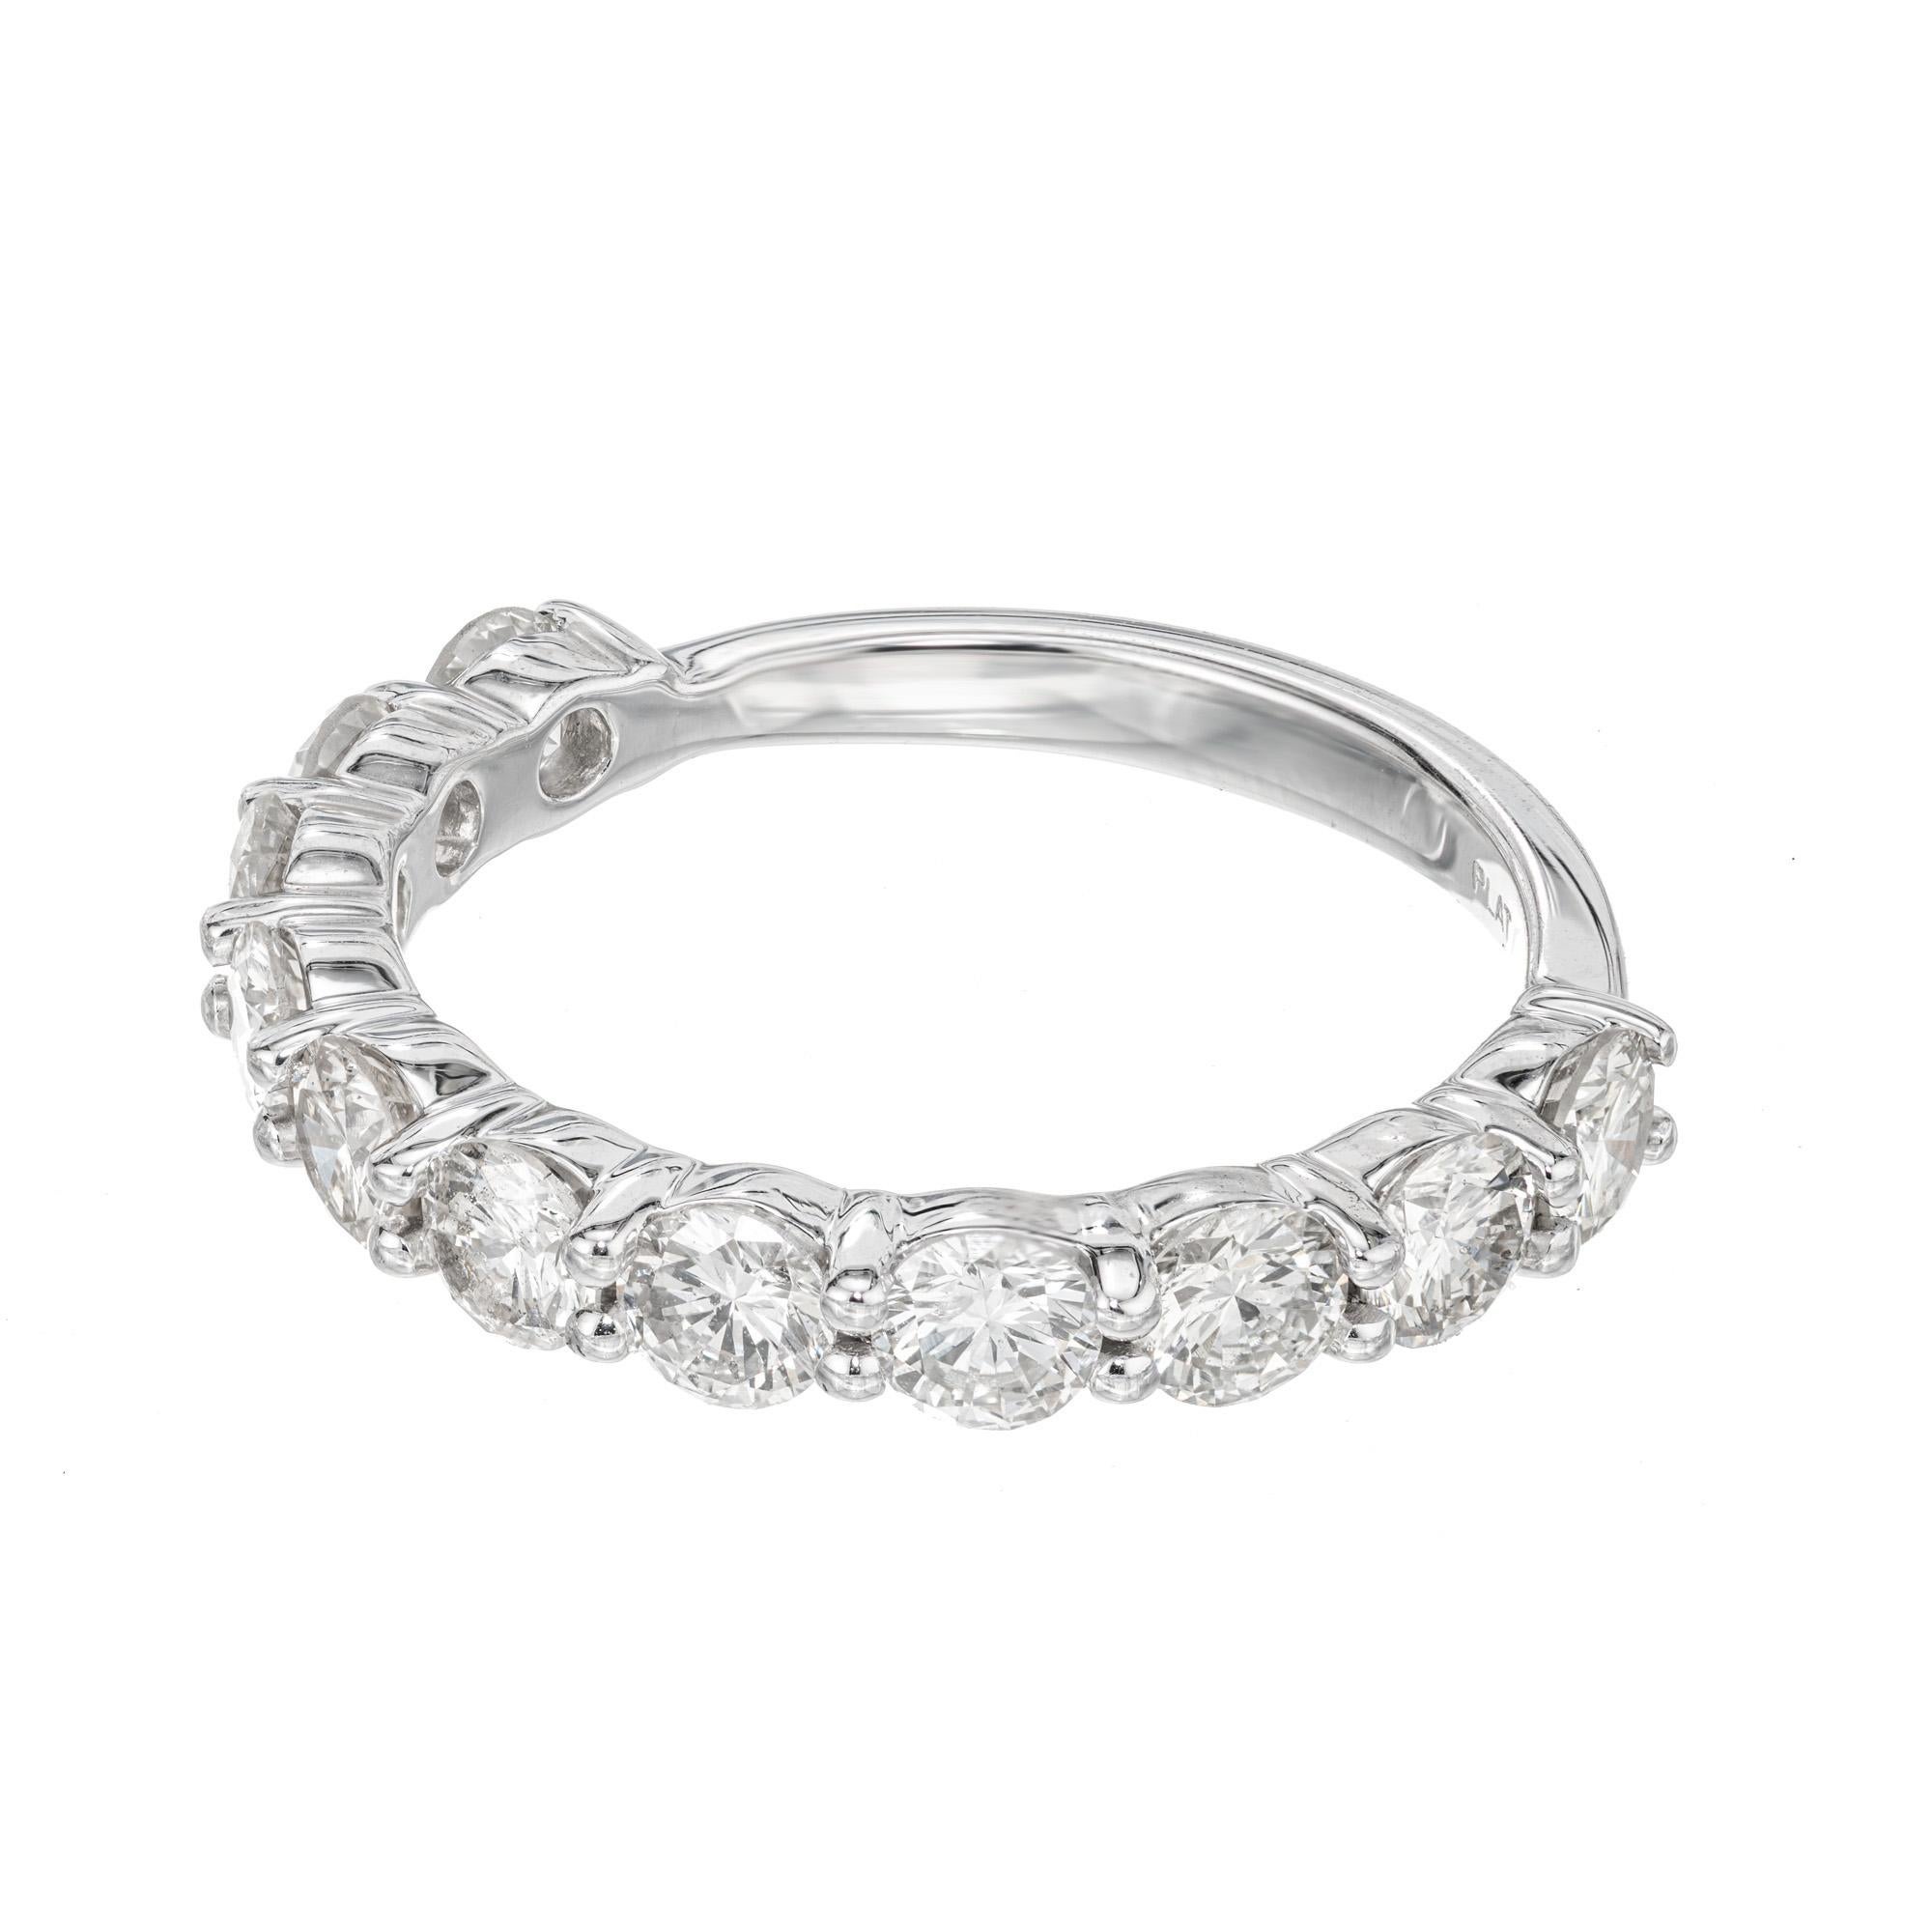 Round Cut Peter Suchy 1.67 Carat Round Diamond Platinum Wedding Band Ring For Sale